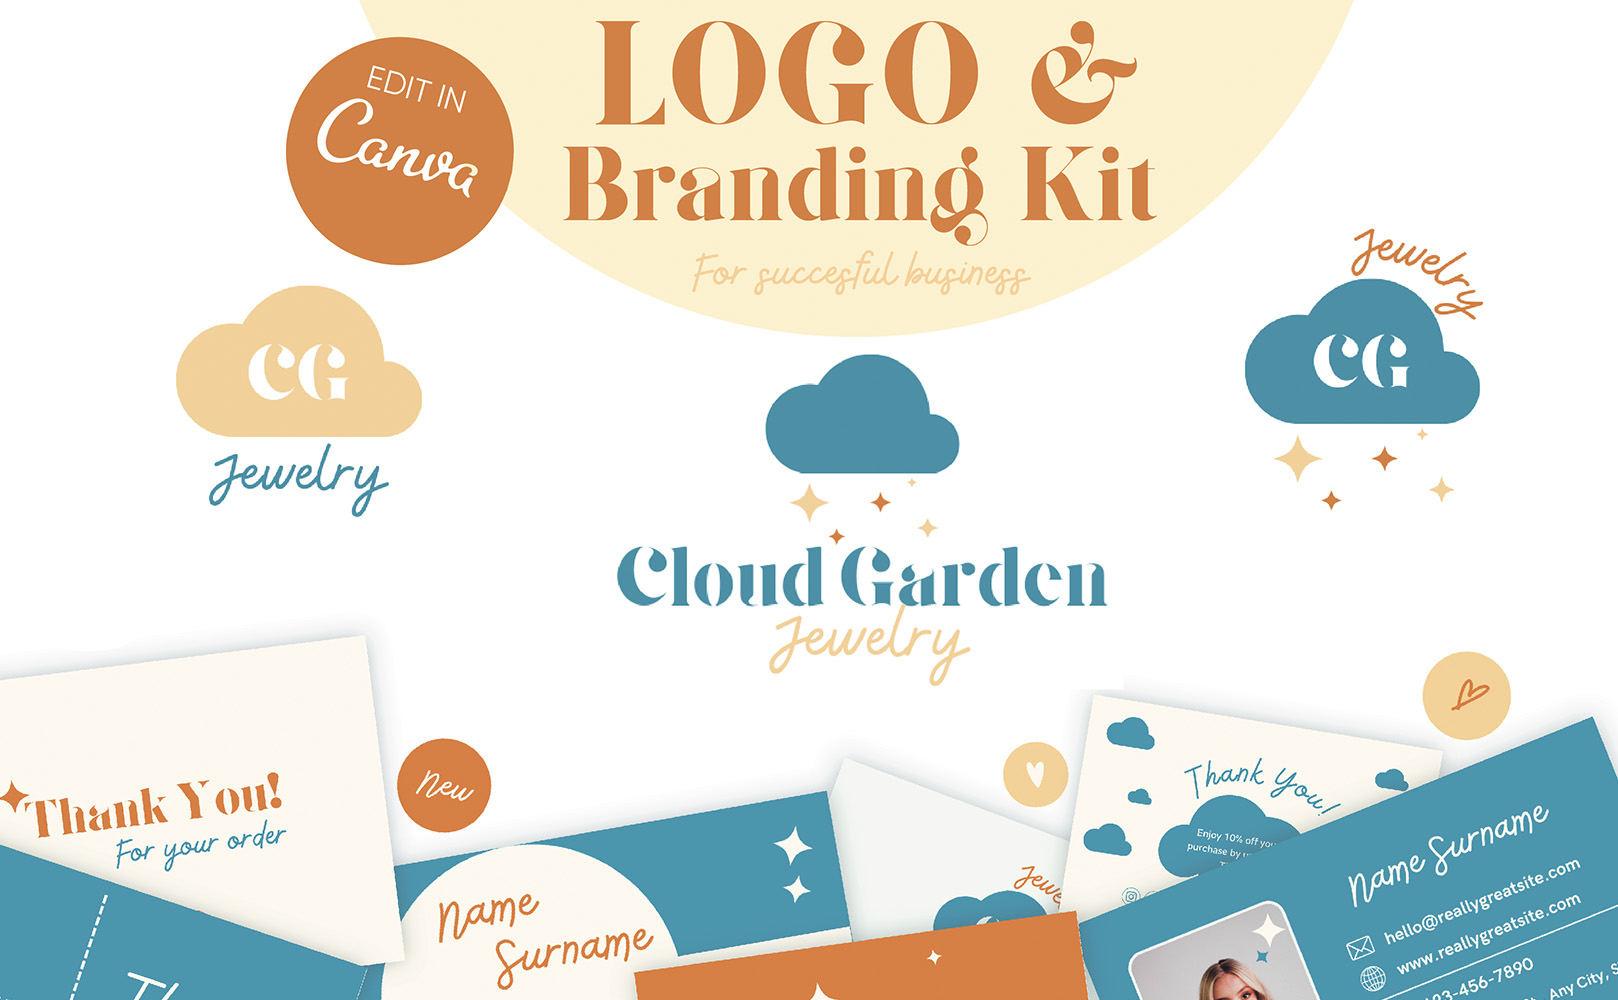 Branding Kit Canva Templates Editable Logo, Business Cards, Thank You Cards, Facebook & Twitter header Instagram Highlights pinterest preview image.